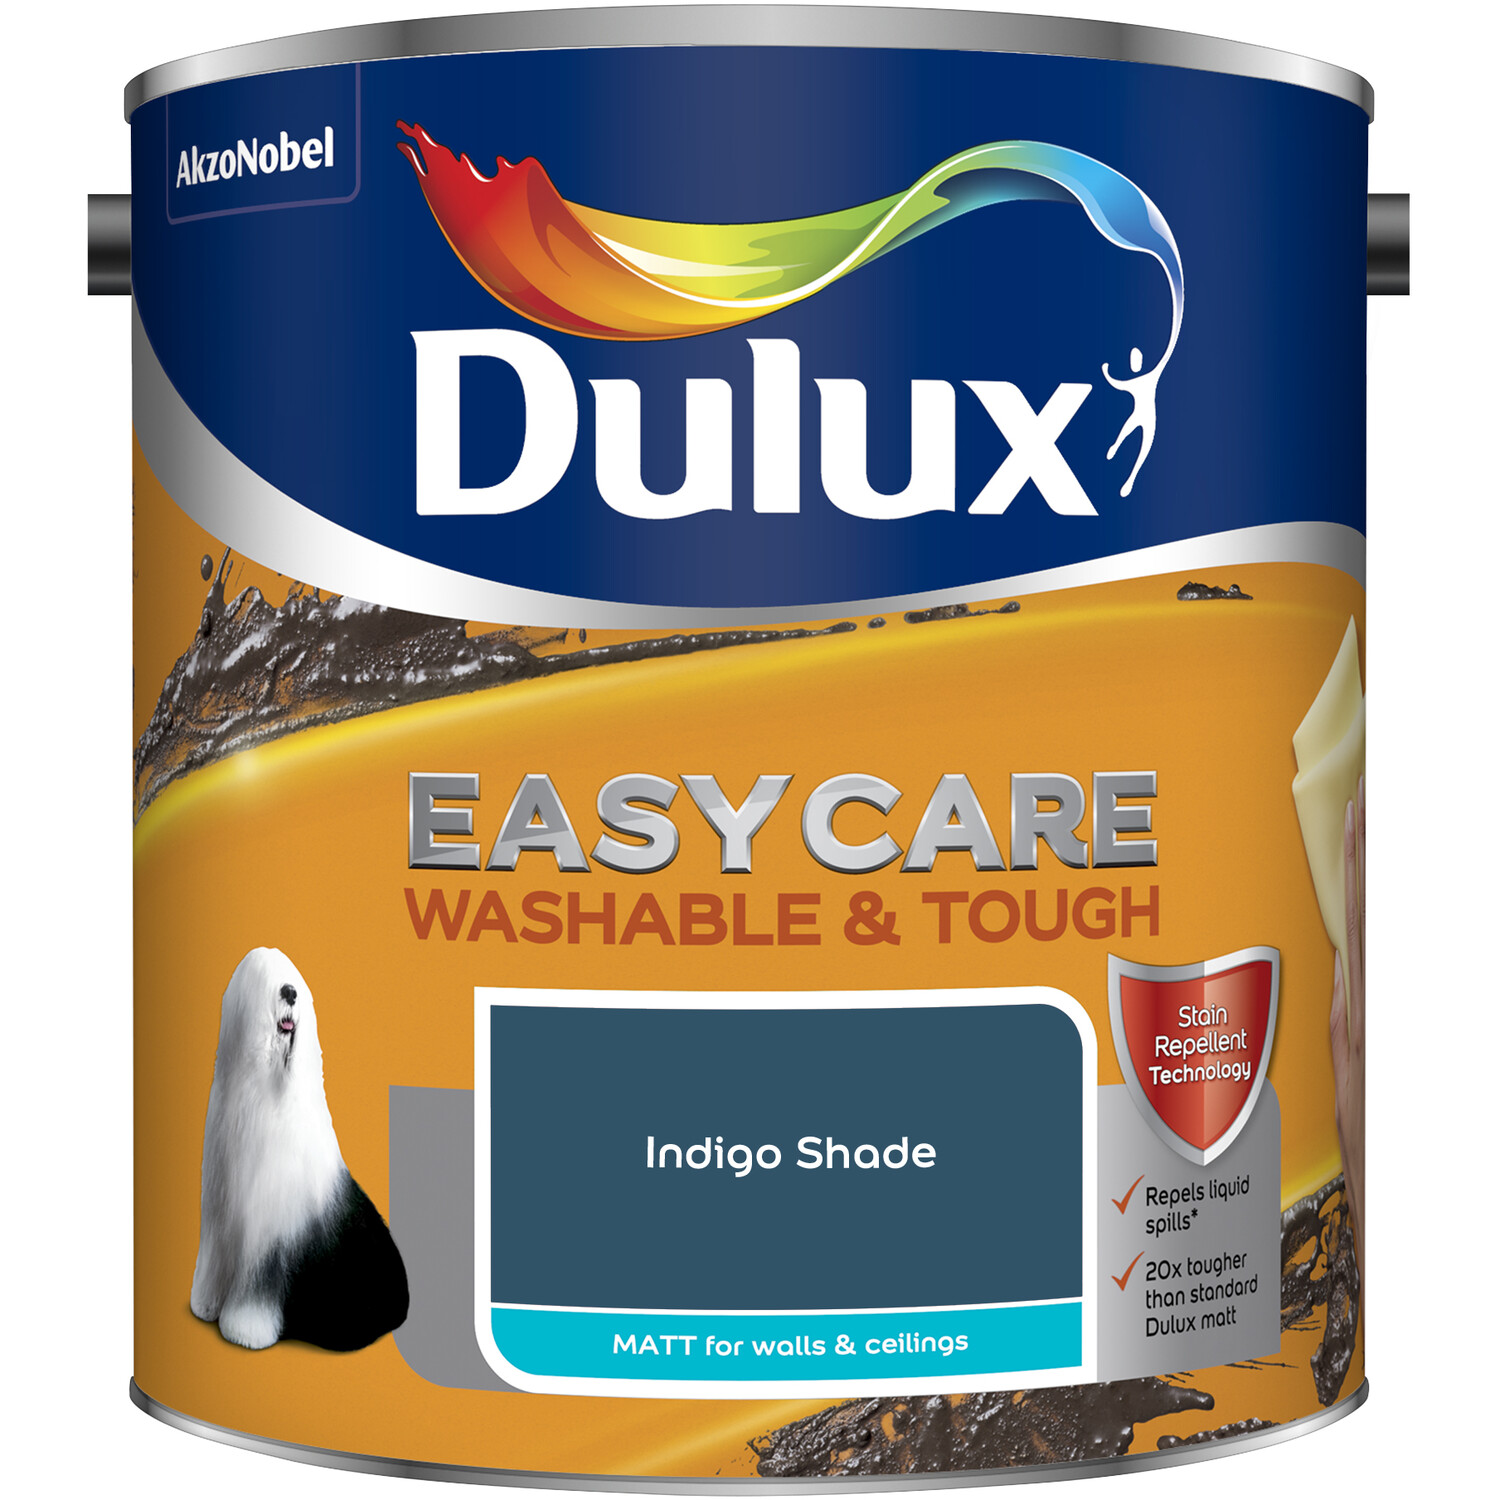 Dulux Easycare Washable & Tough Indigo Shade Matt Paint 2.5L Image 2